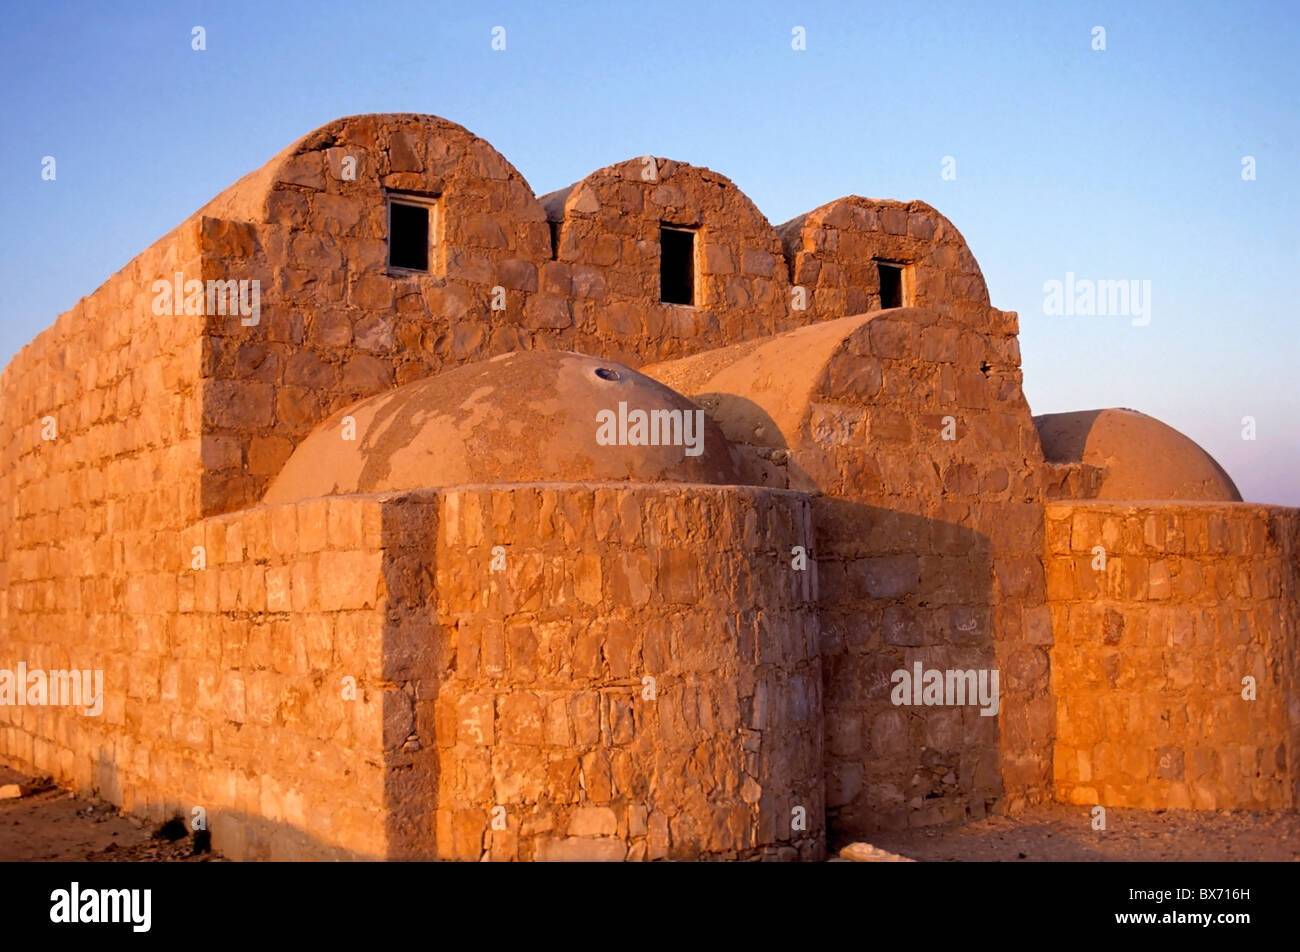 Ruins of Qasr Amra, an 8th century castle in the desert, Jordan - at dusk Stock Photo